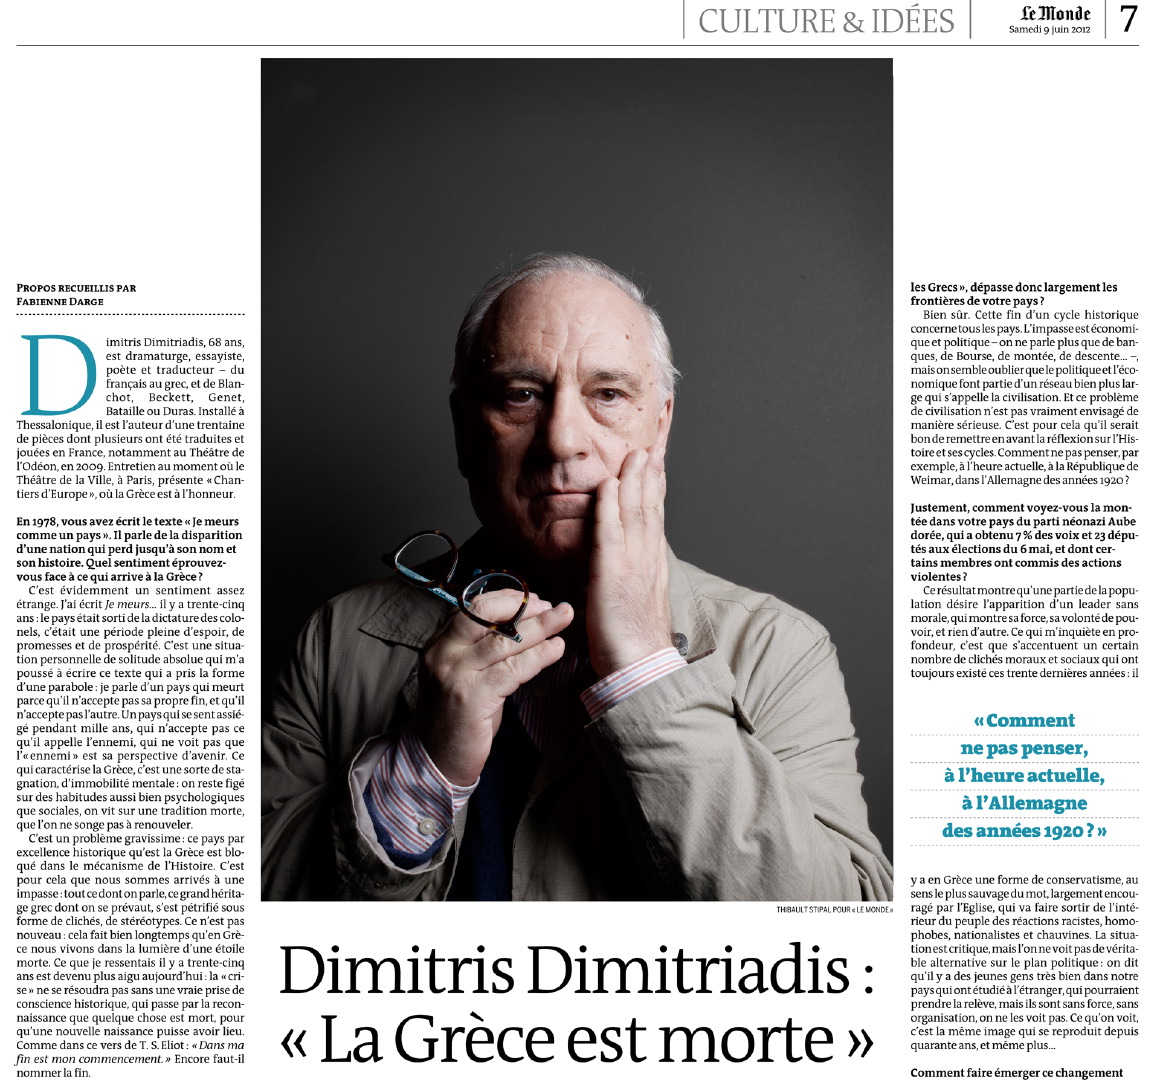 Thibault Stipal - Photographe - Dimitris Dimitriadis / Le Monde - 1